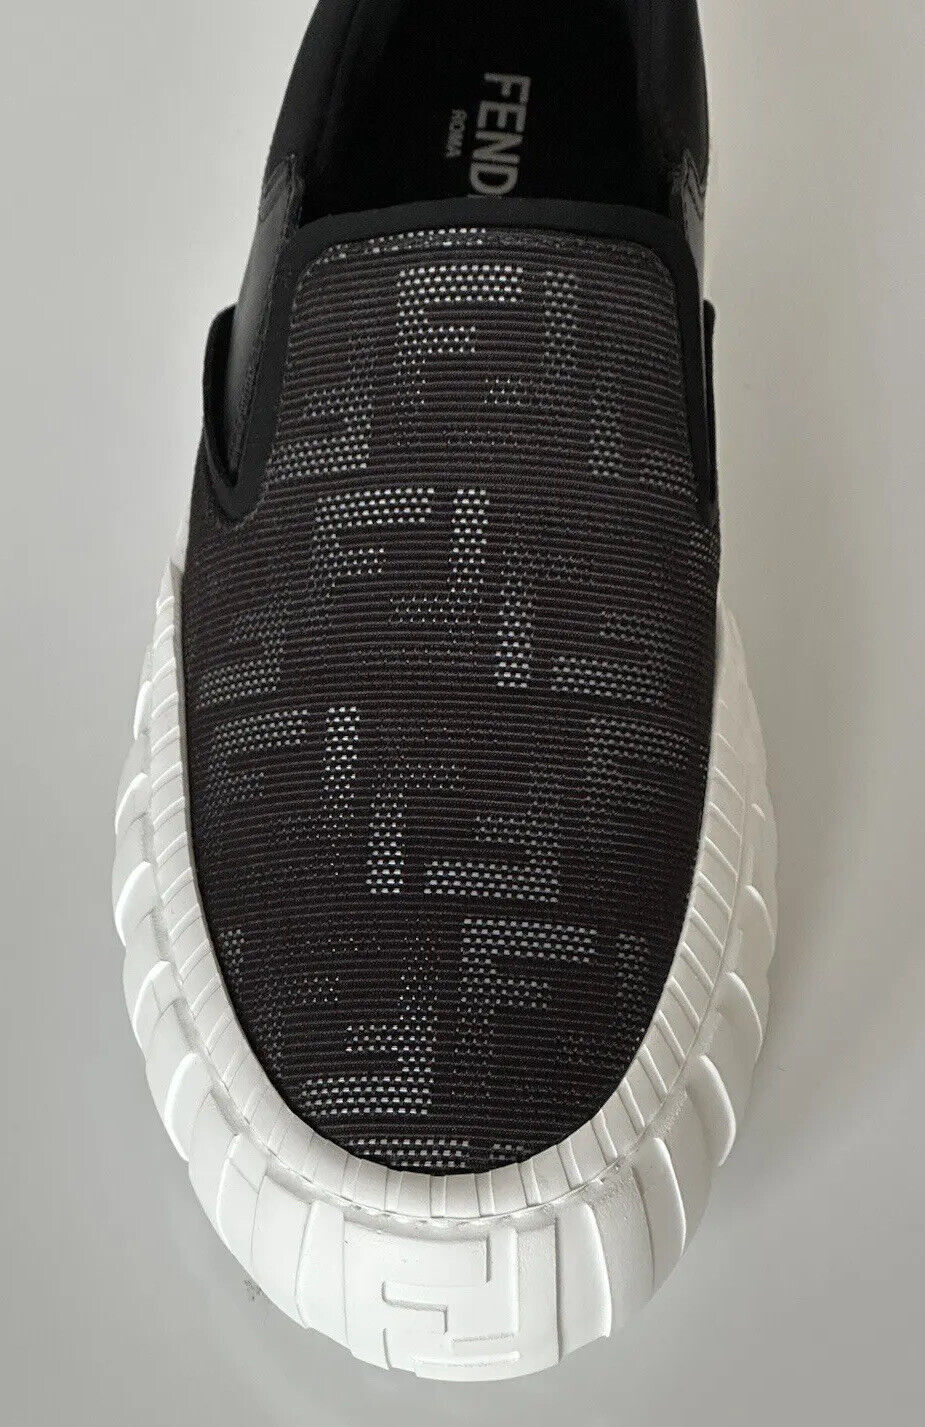 NIB $750 Fendi FF Logo Fabric/Leather Black Sneakers 8 US (Fendi 7) 7E1454 Italy